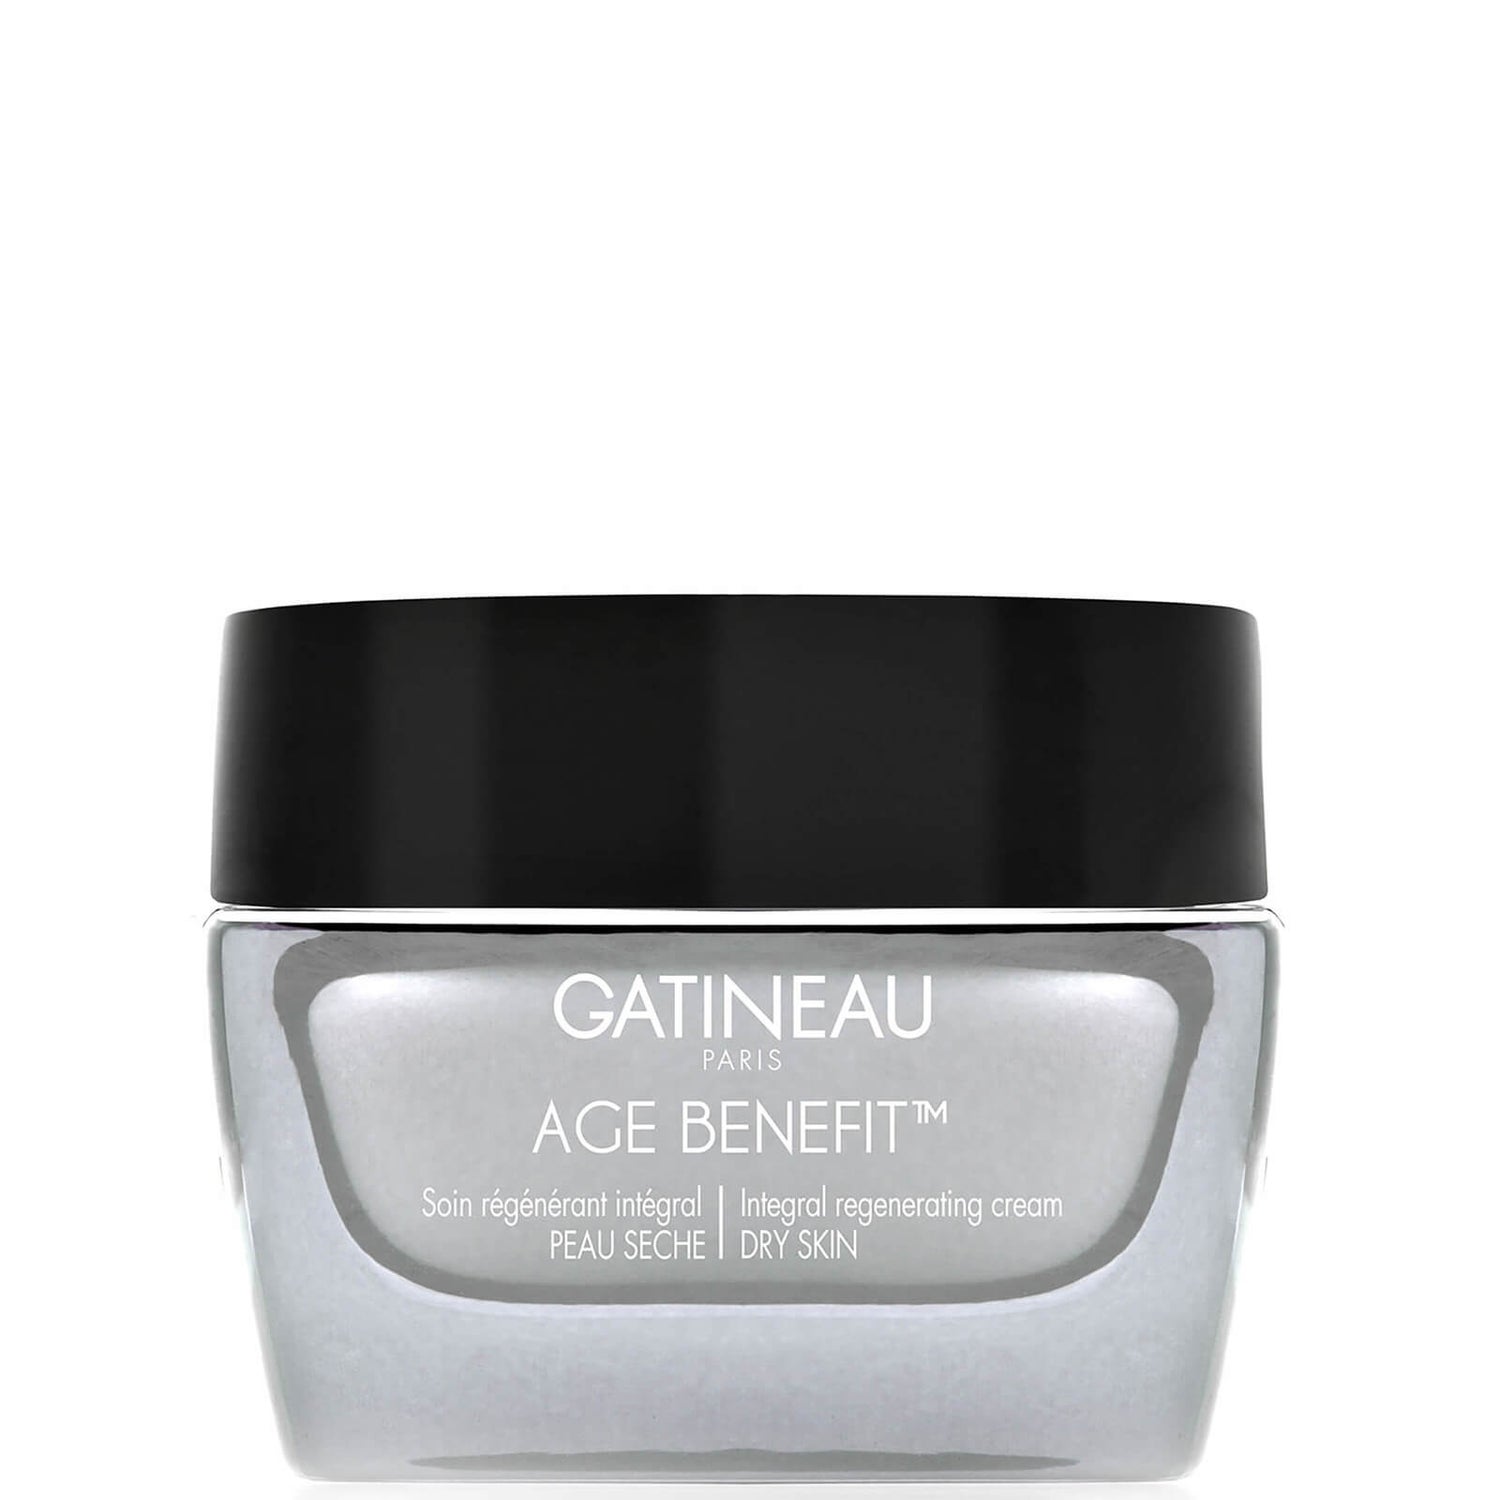 Gatineau Age Benefit Integral Regenerating Cream - Dry Skin 50ml